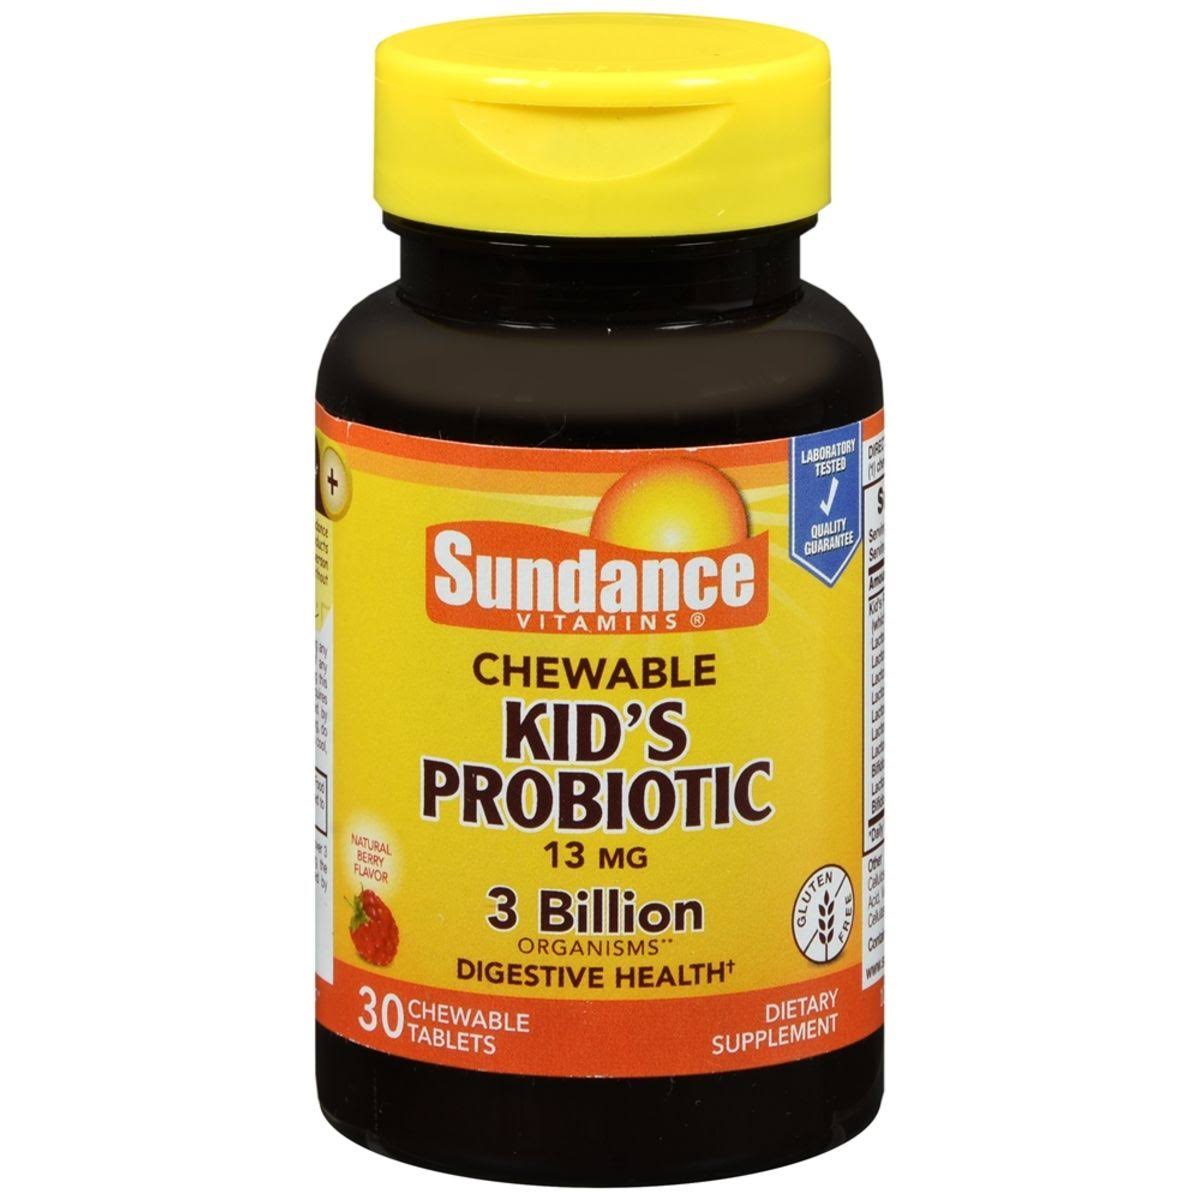 Sundance Chewable Kid's Probiotic 13MG 3 Billion, 30